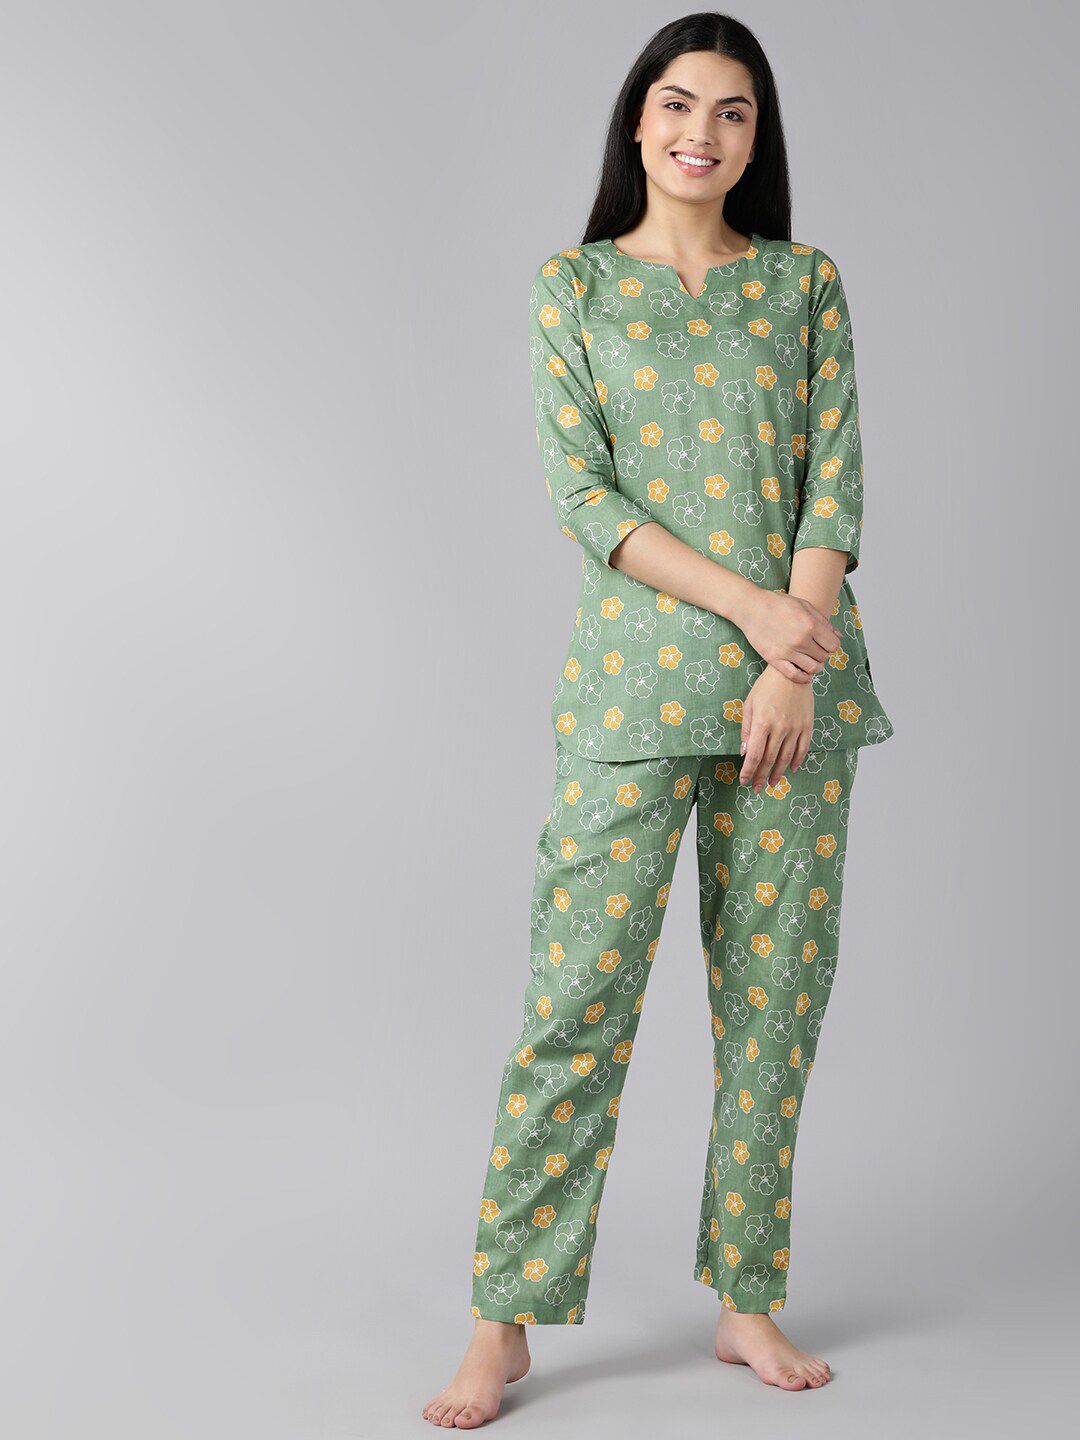 AHIKA Women Green Printed Night suit Price in India